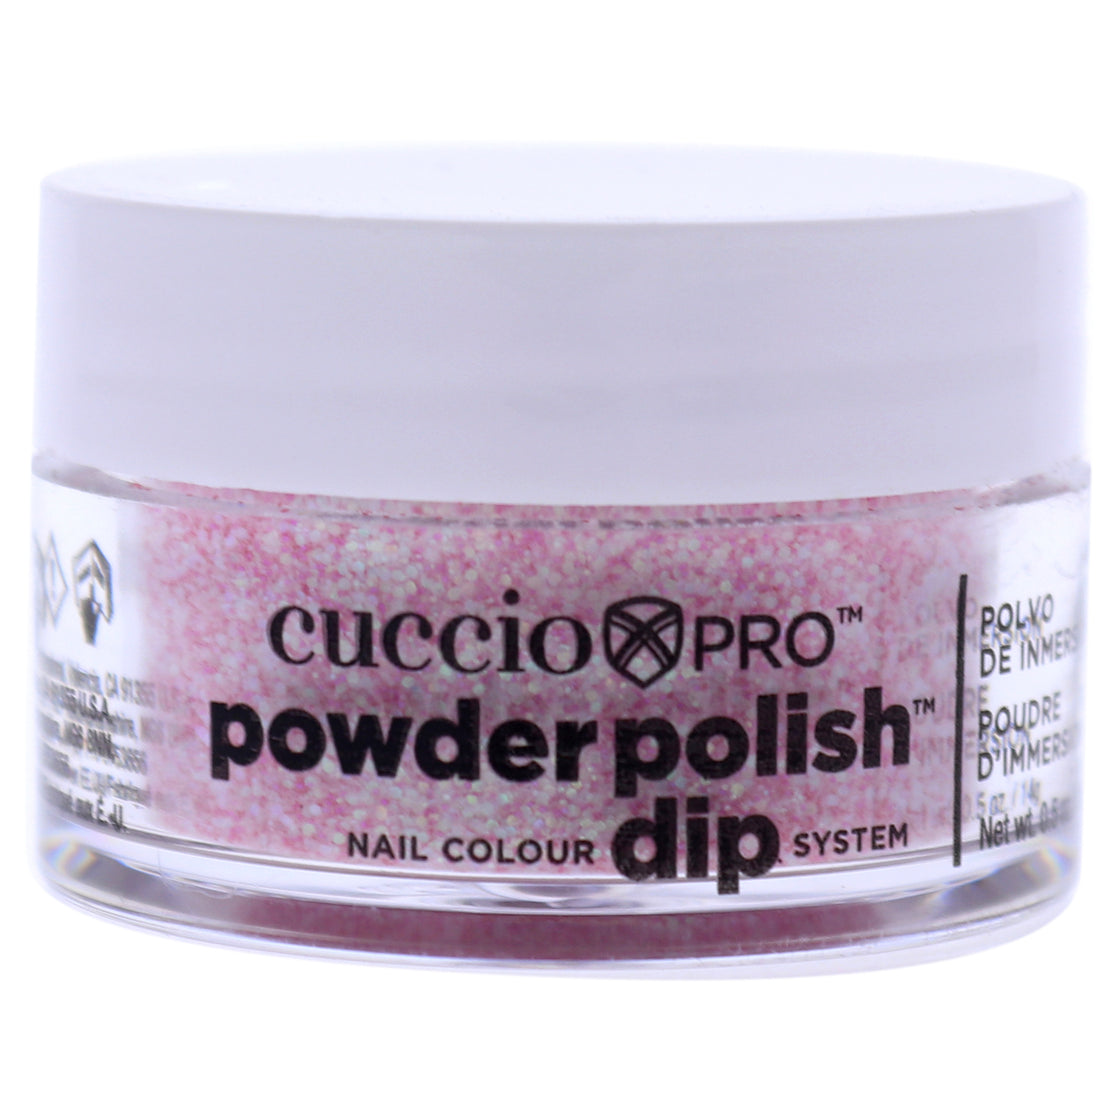 Pro Powder Polish Nail Colour Dip System - Soft Pink Glitter by Cuccio Colour for Women - 0.5 oz Nail Powder